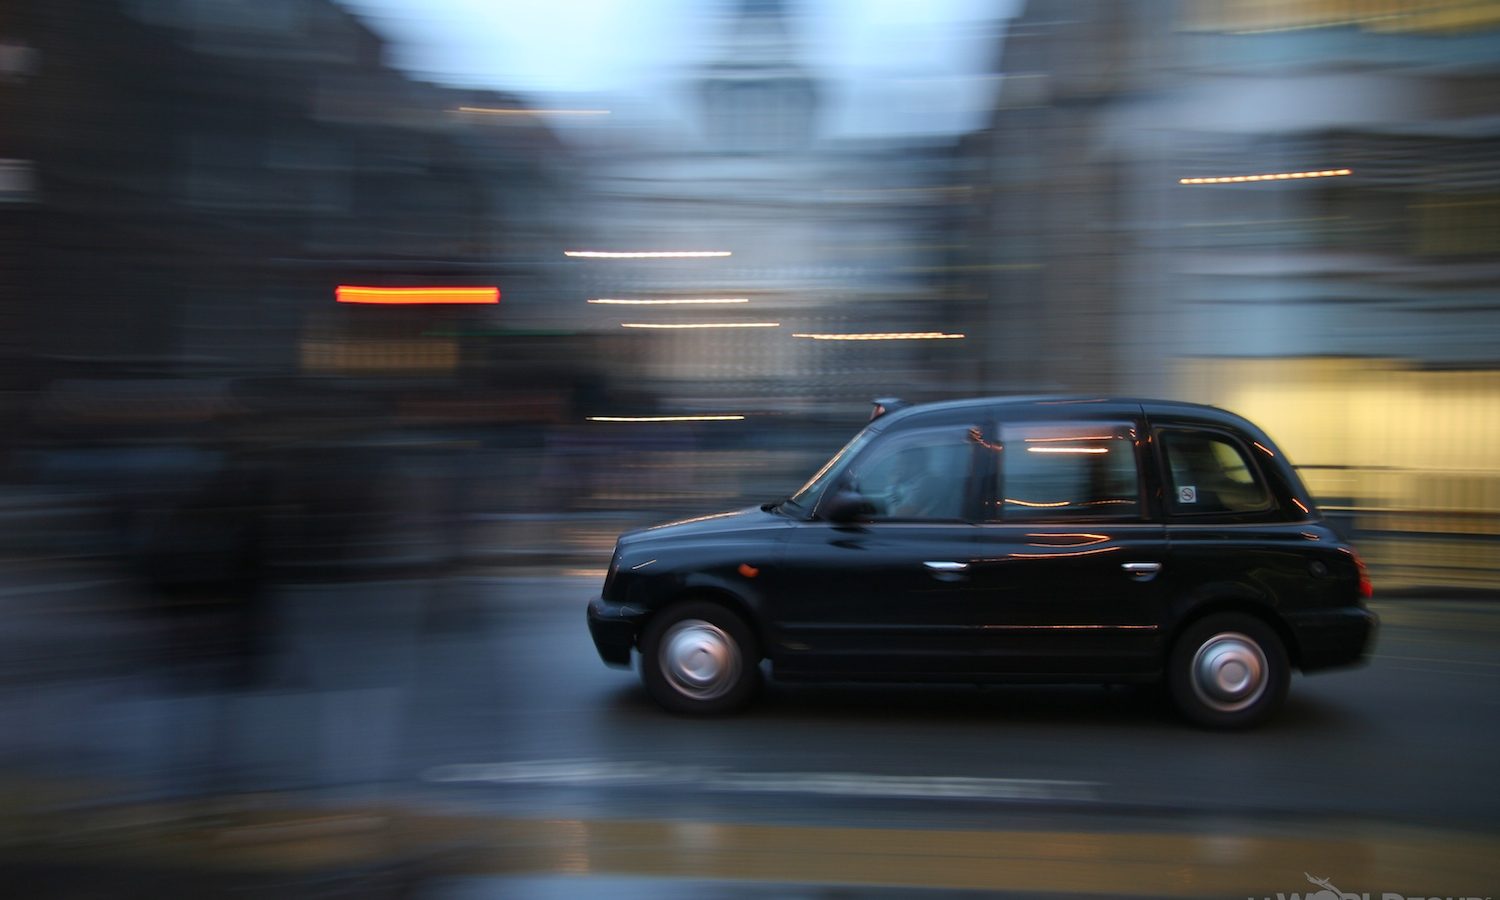 Black Cab - London